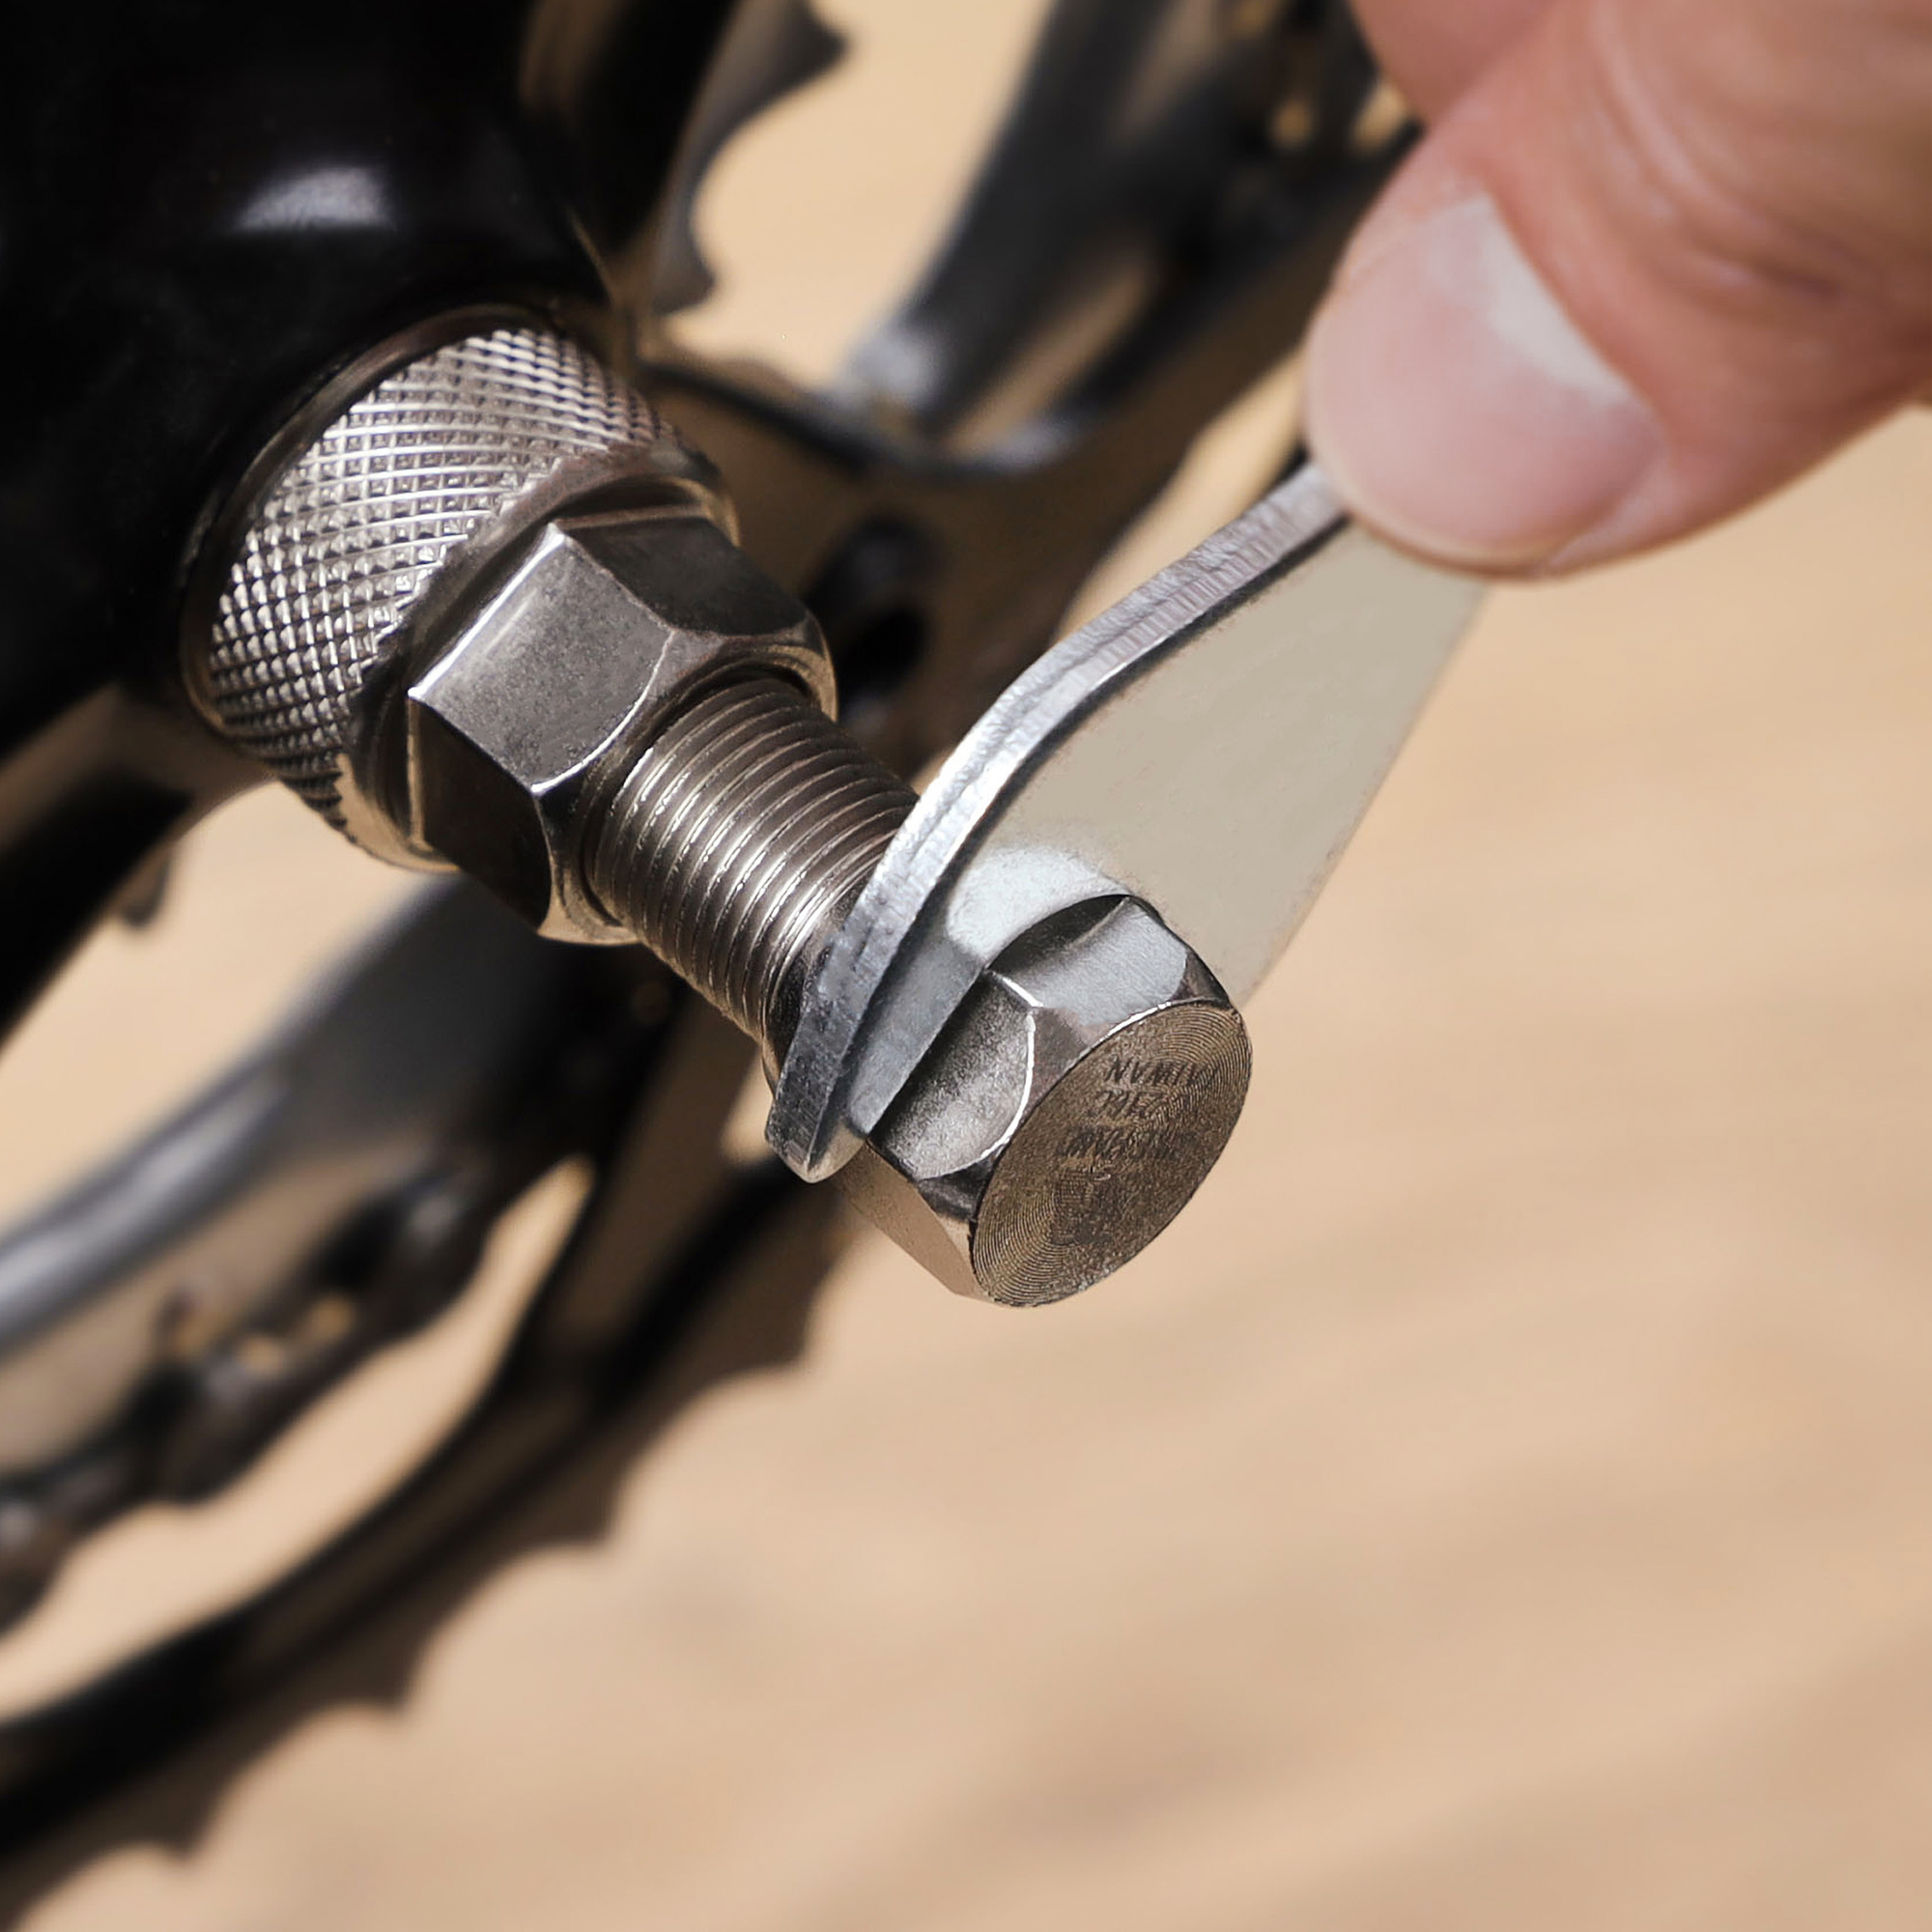 BIKEHAND Bicycle Bike Crankset Crank Arm Puller Remover Removal Tool